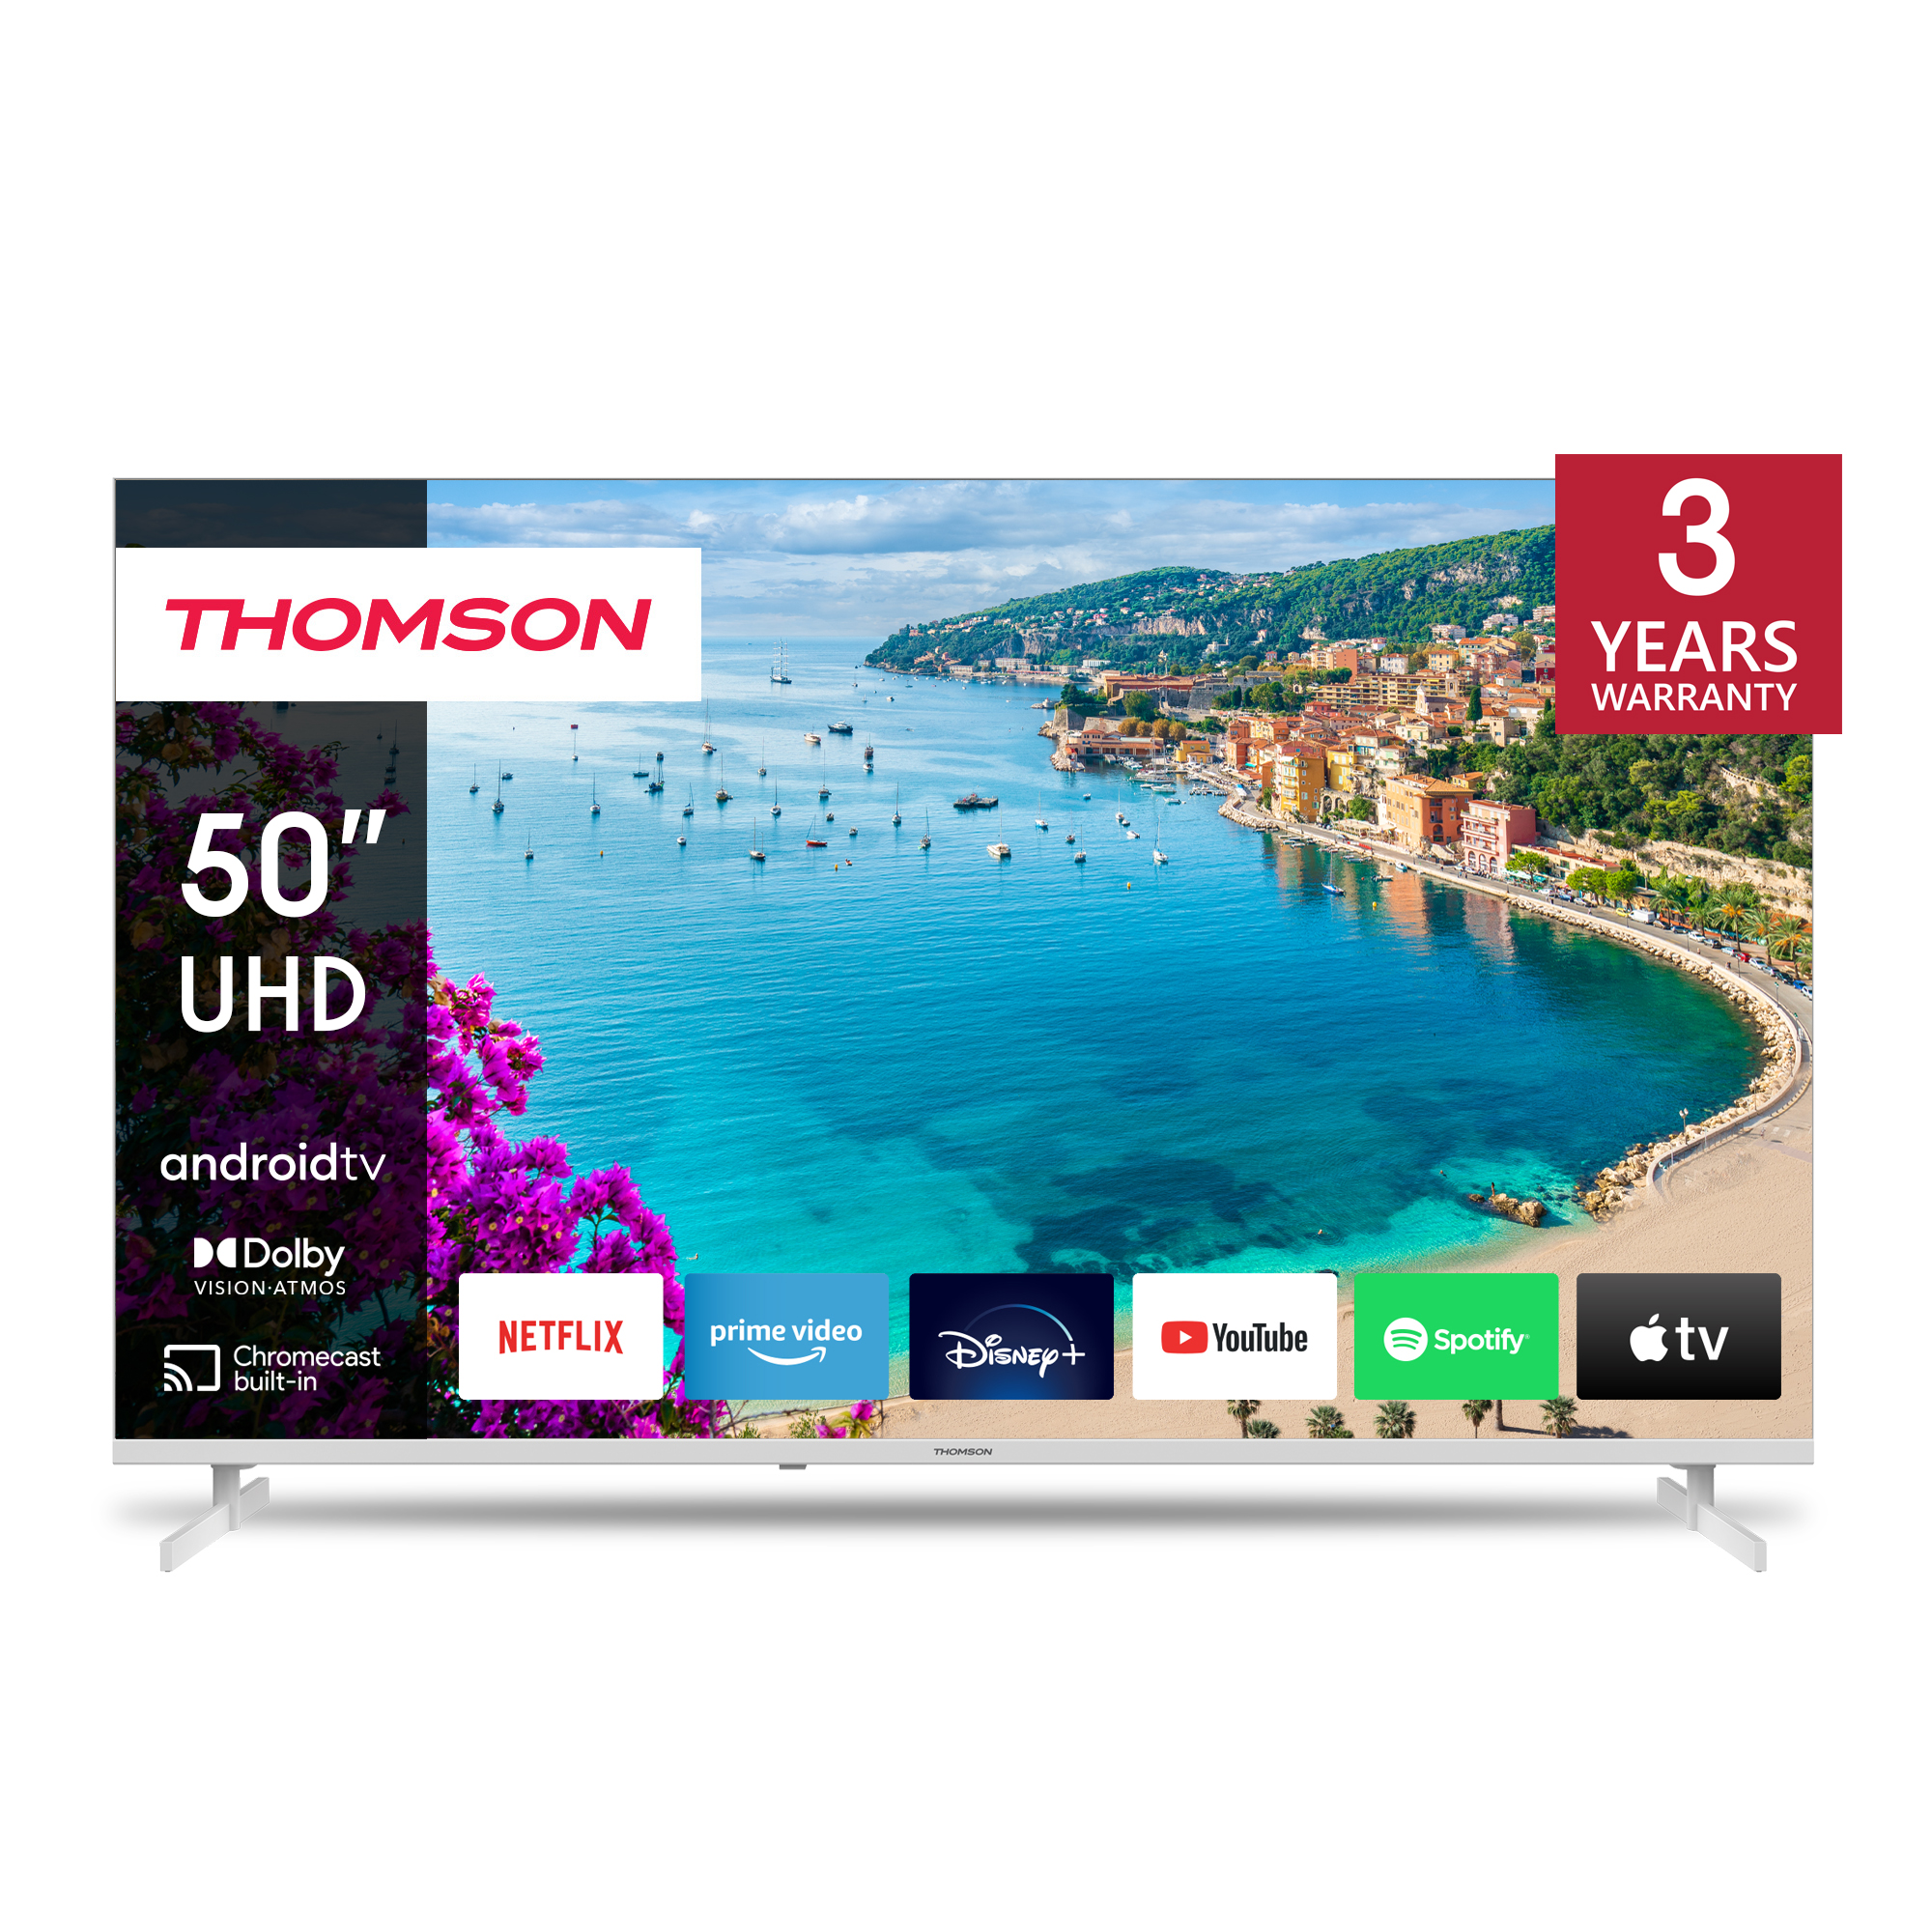 Thomson Android TV 50" UHD White